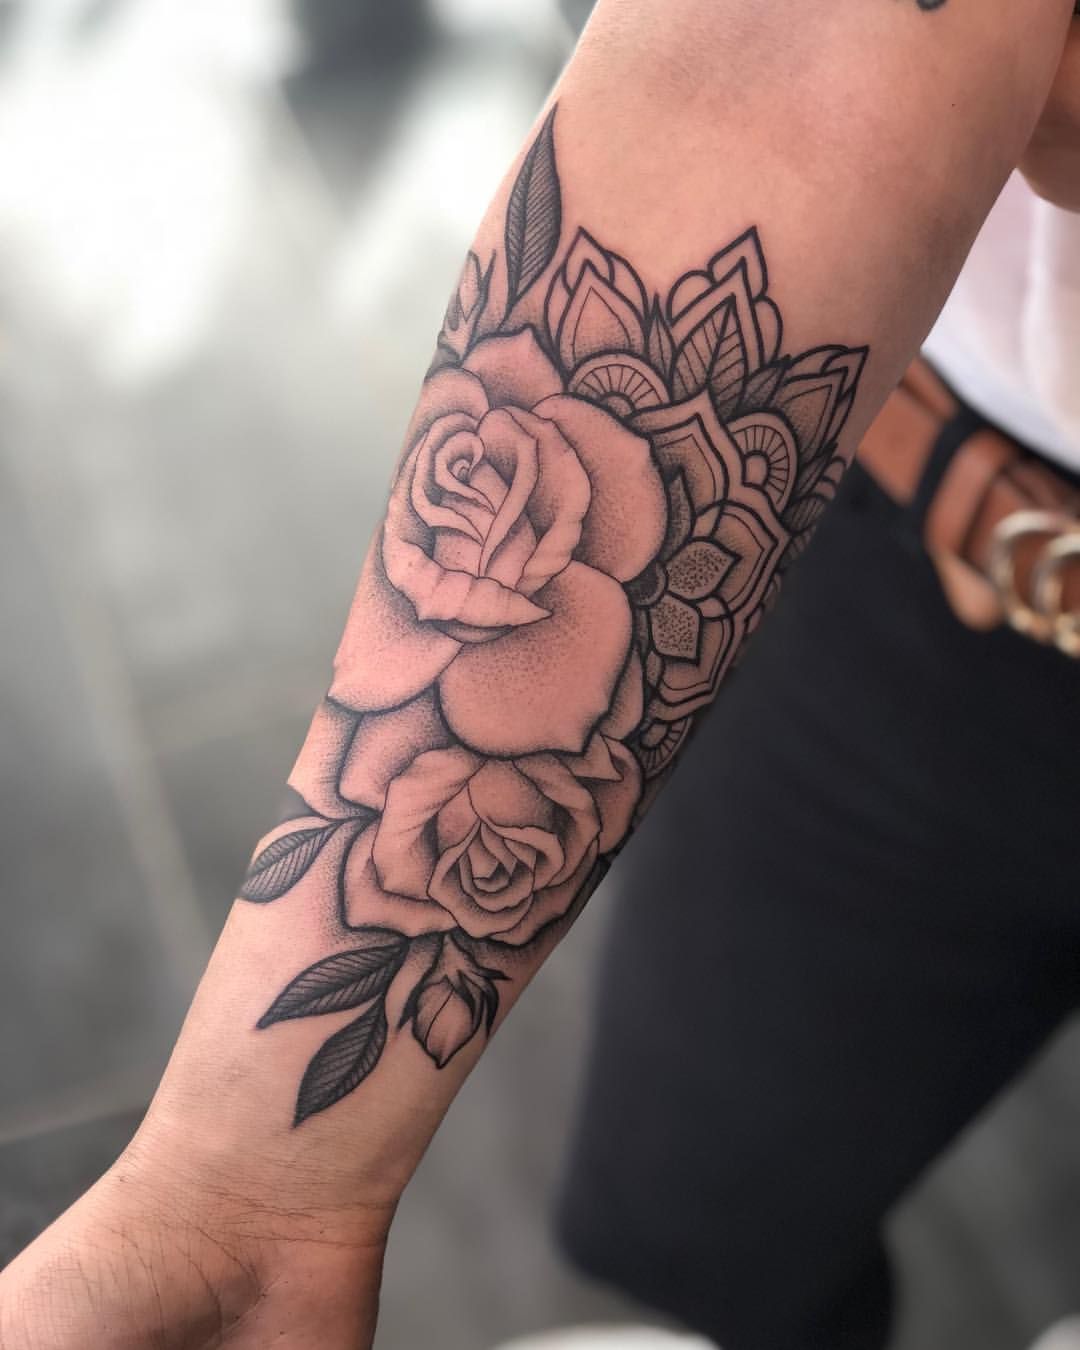 Female Wrist Tattoo Ideas Small Designs (187)